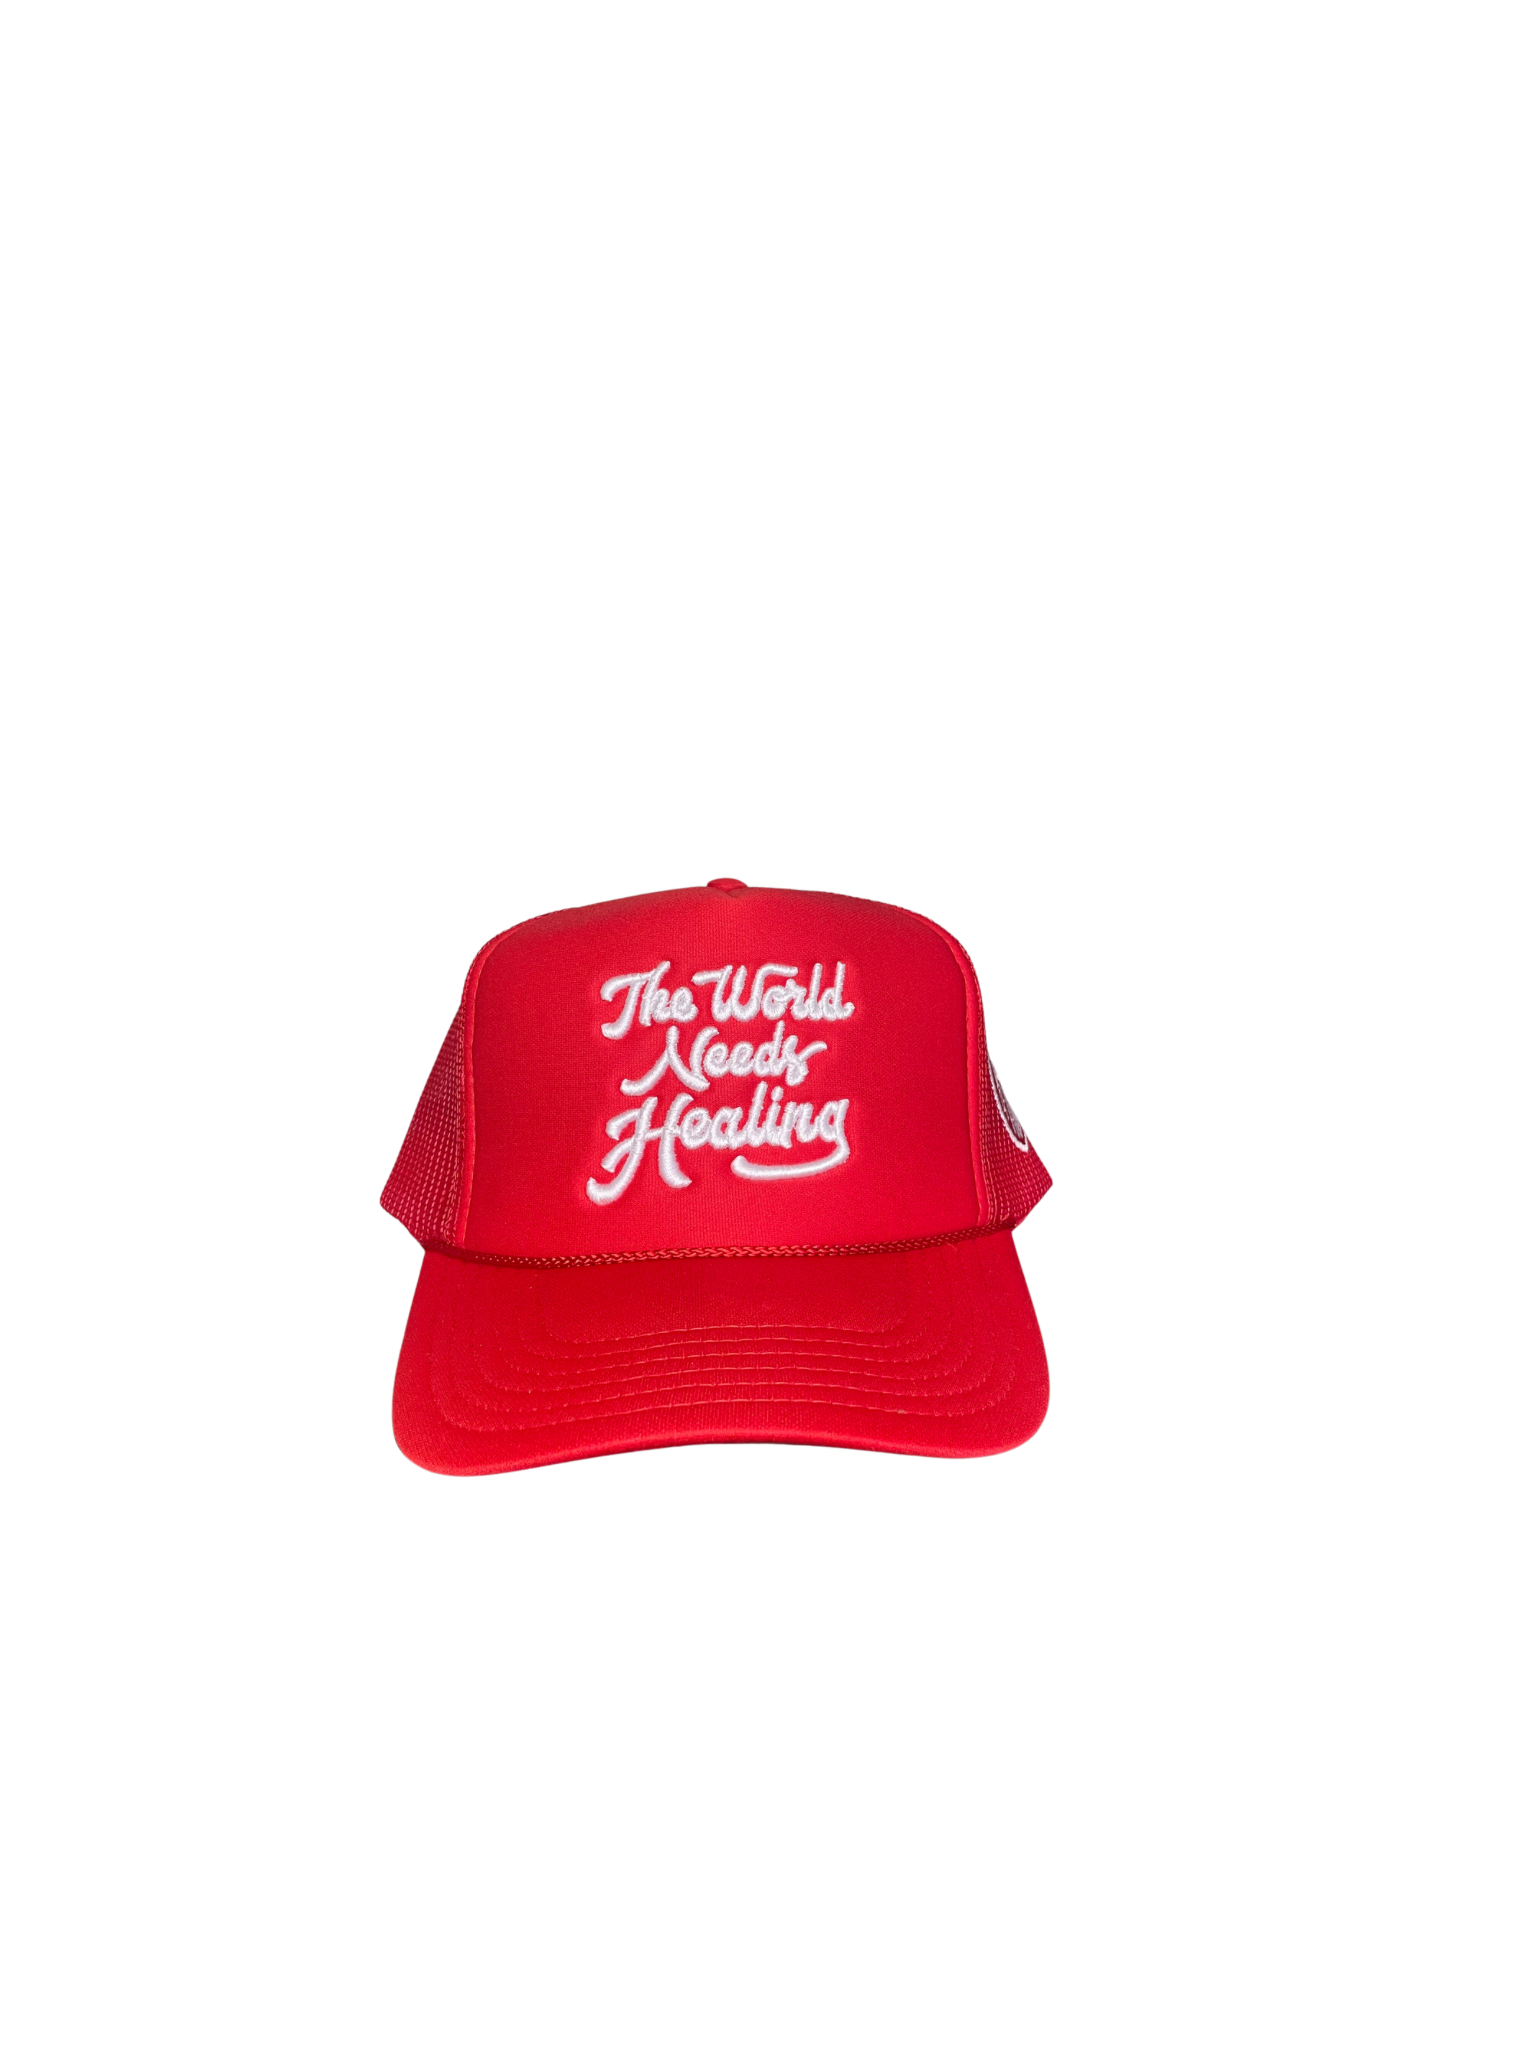 World Needs Healing Trucker Hat